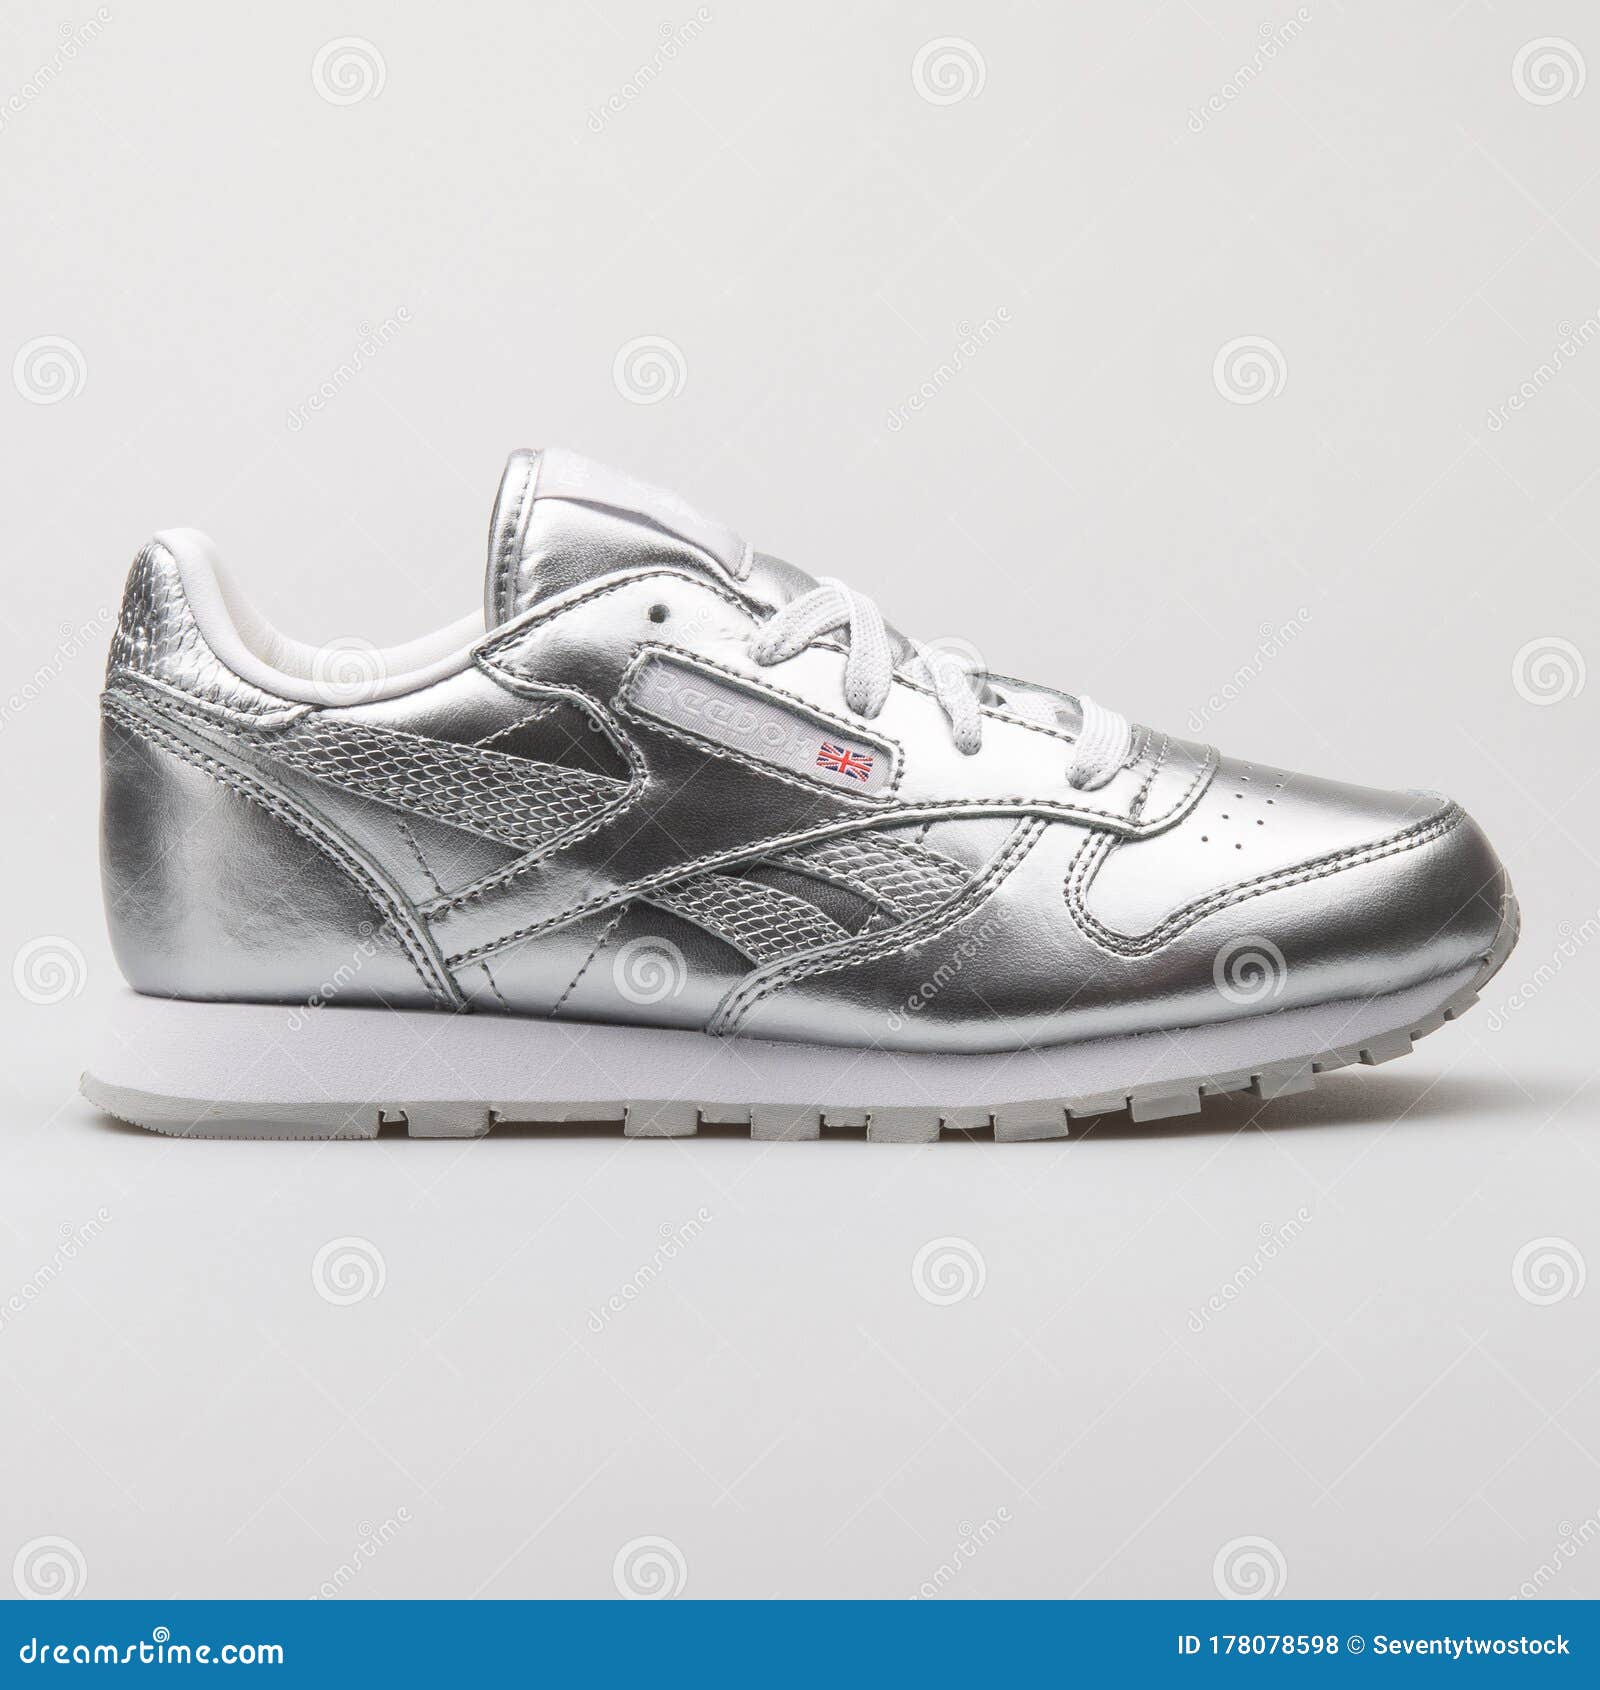 Reebok Classic Leather Metallic Sneaker Editorial Stock Photo - of shoe: 178078598